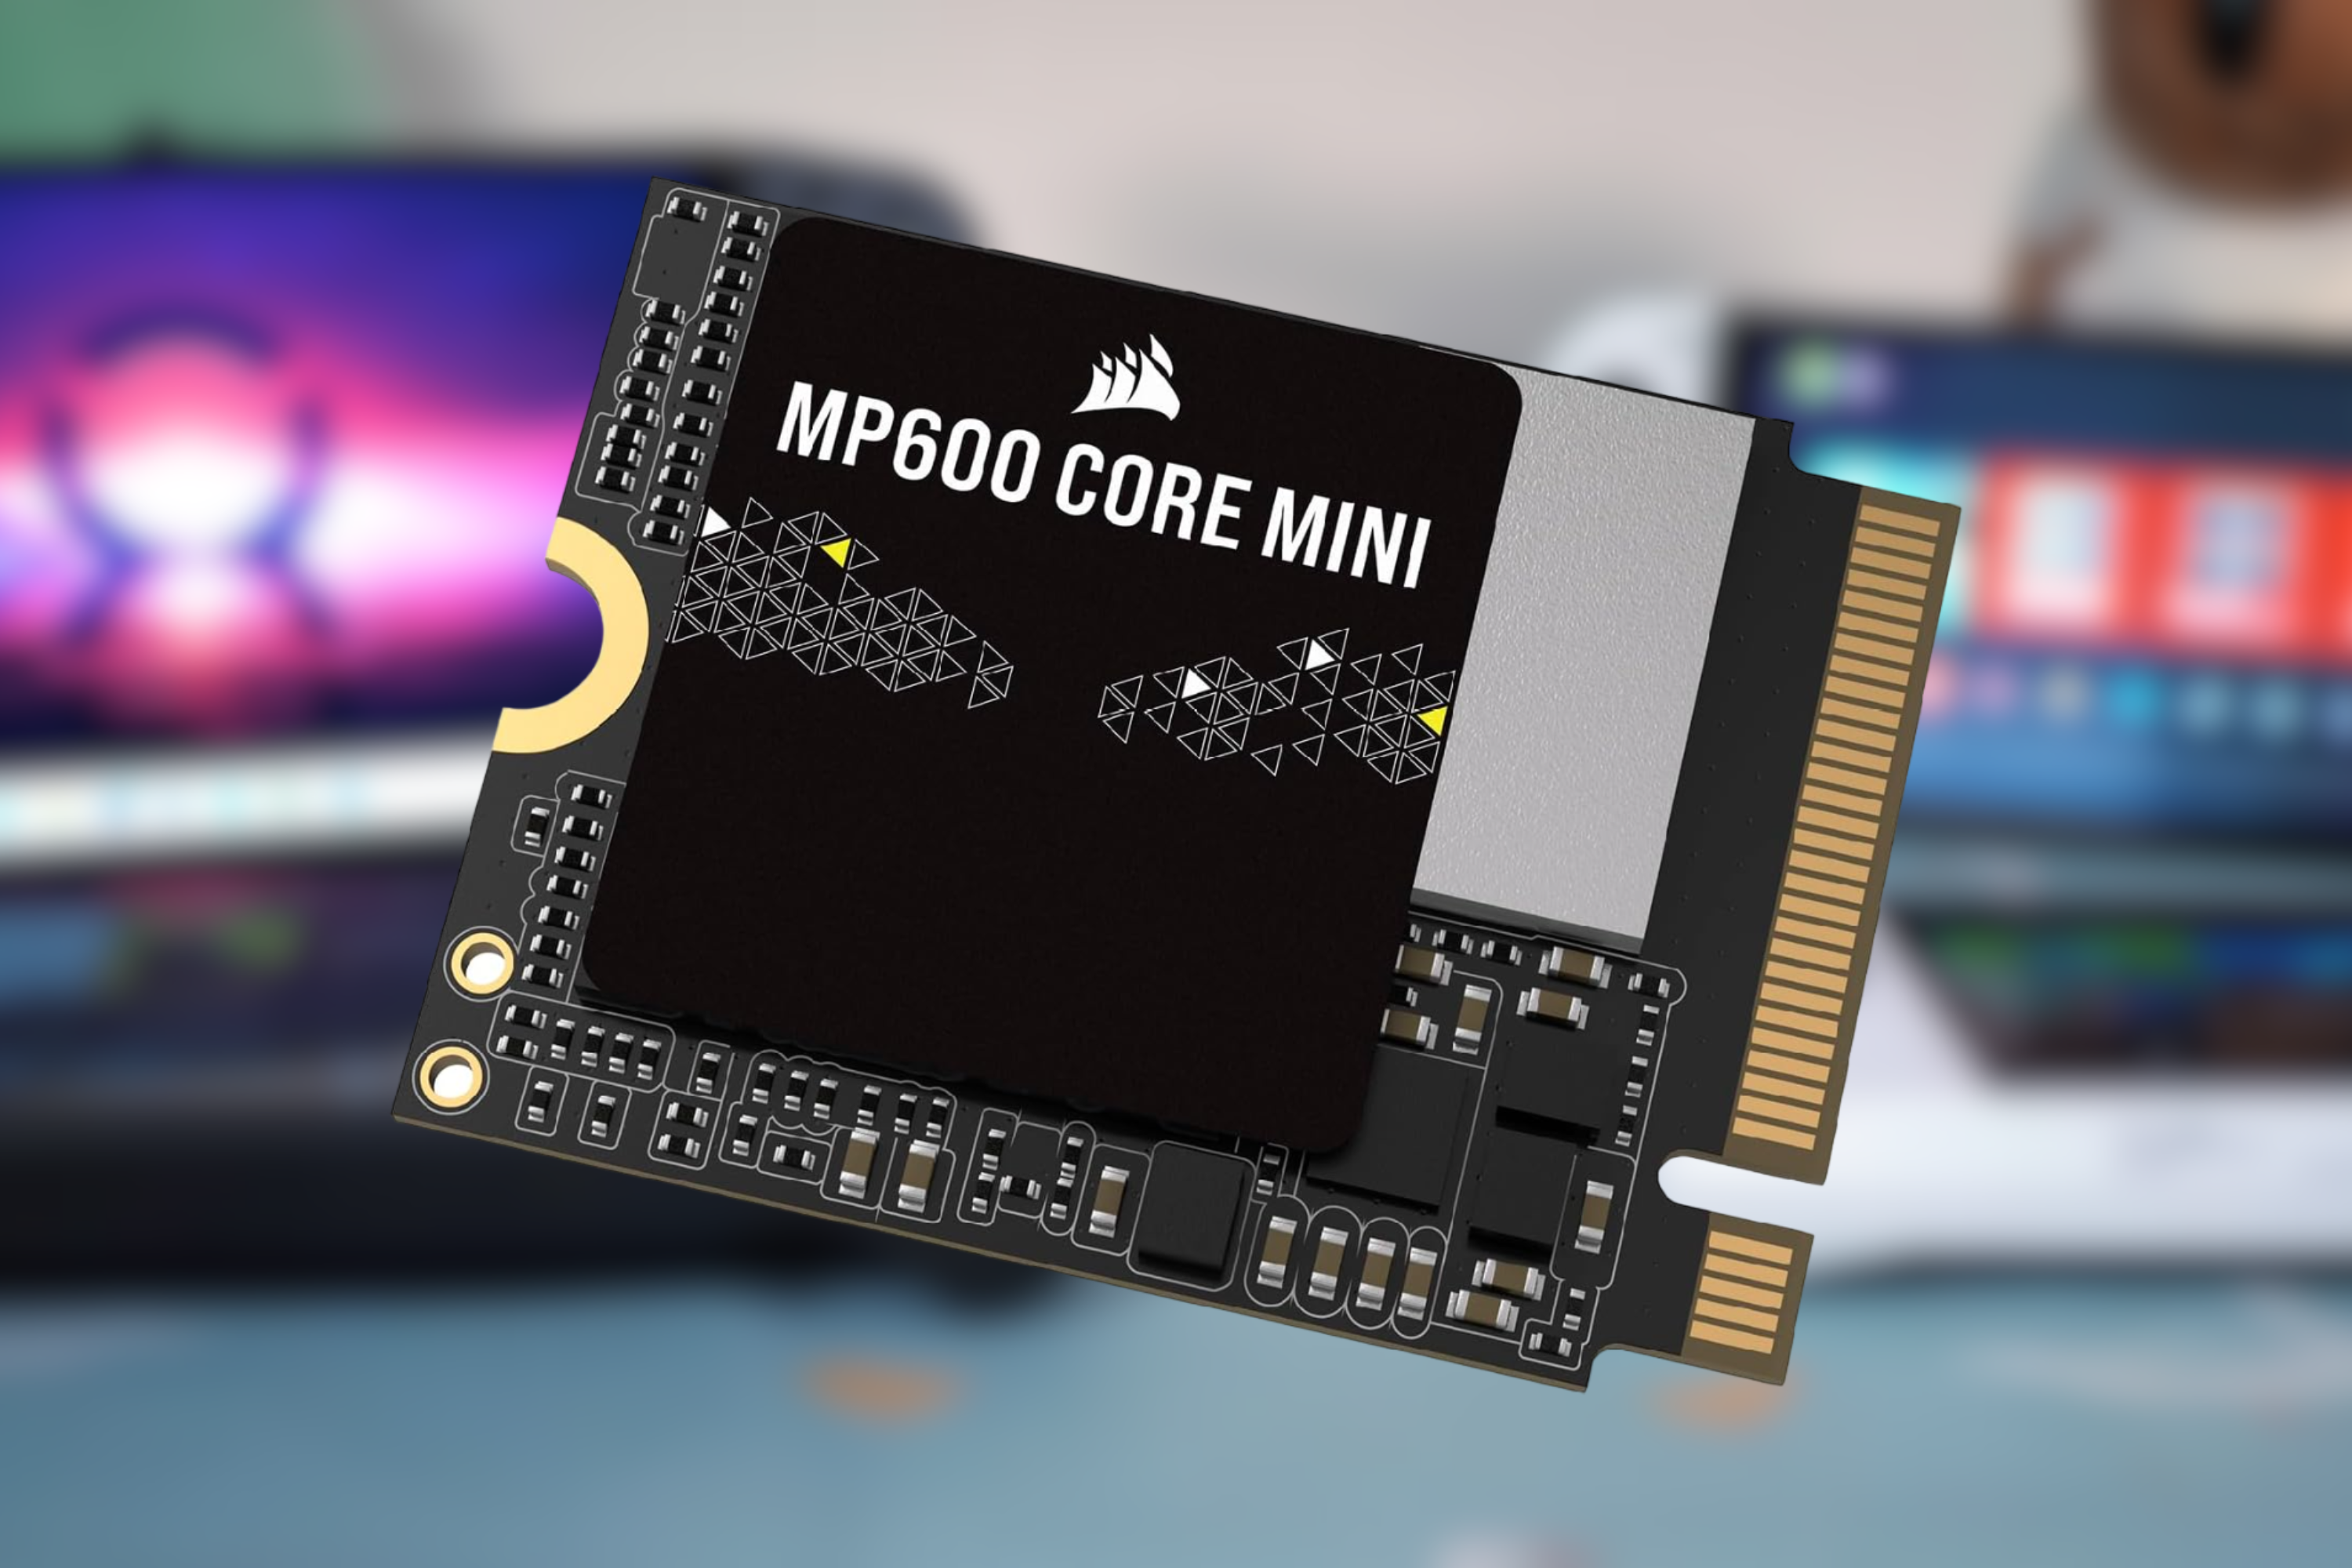 Corsair MP600 Core Mini on blurred background 